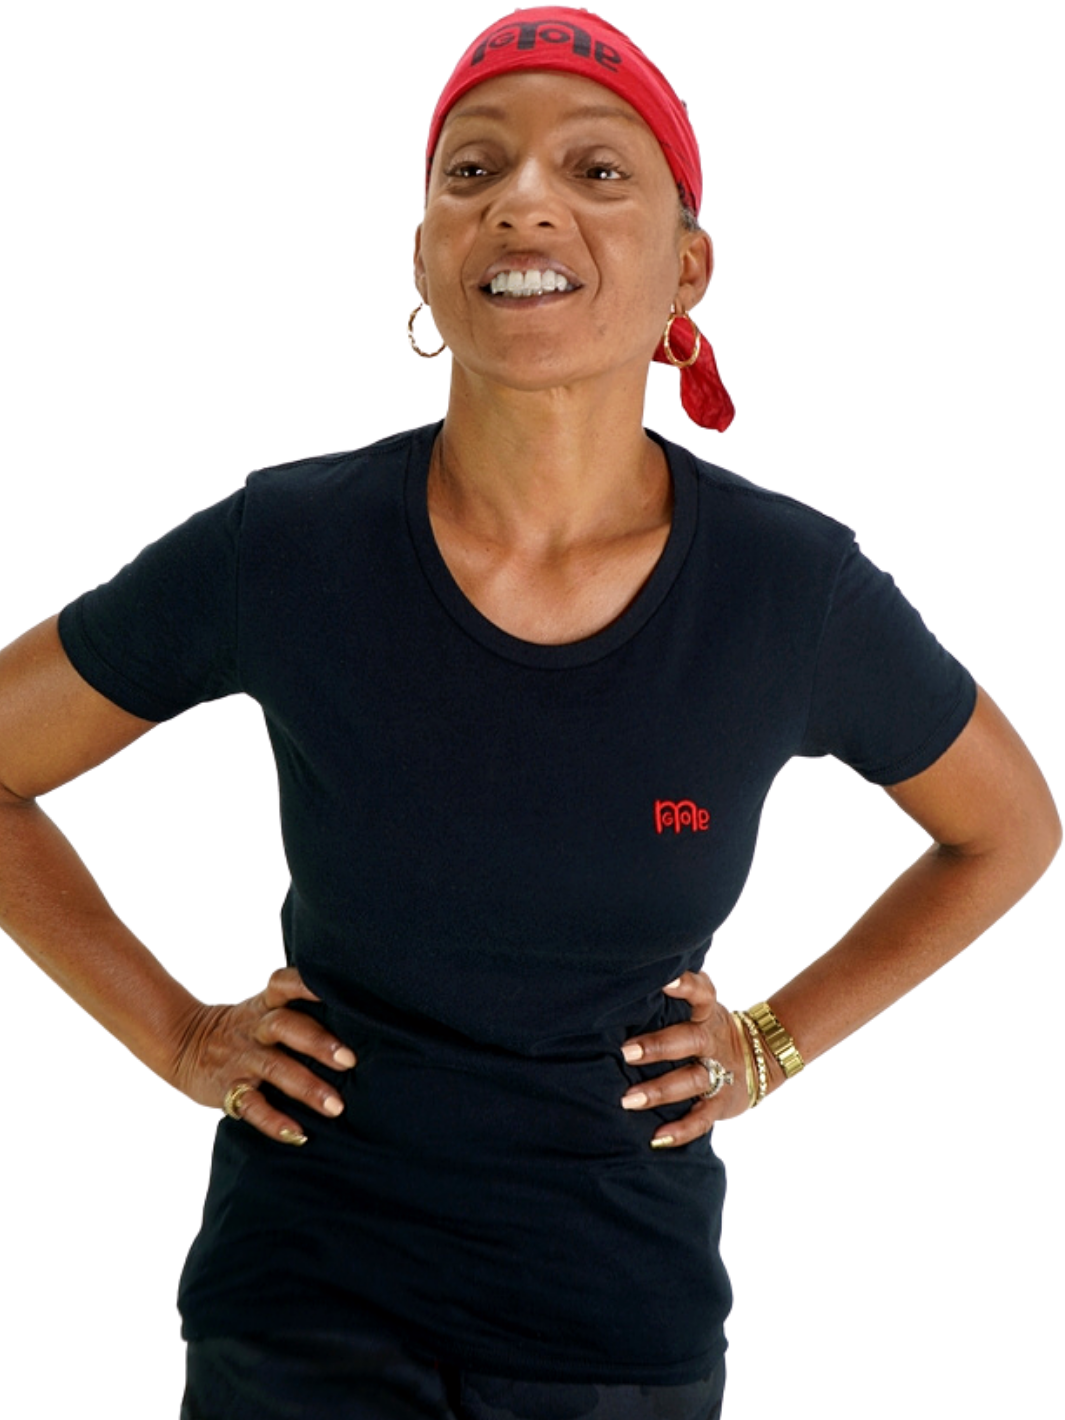 Women's Black GODinme T-Shirt: Super soft, lightweight with feminine curve design, and Red GODinme logo at left chest.